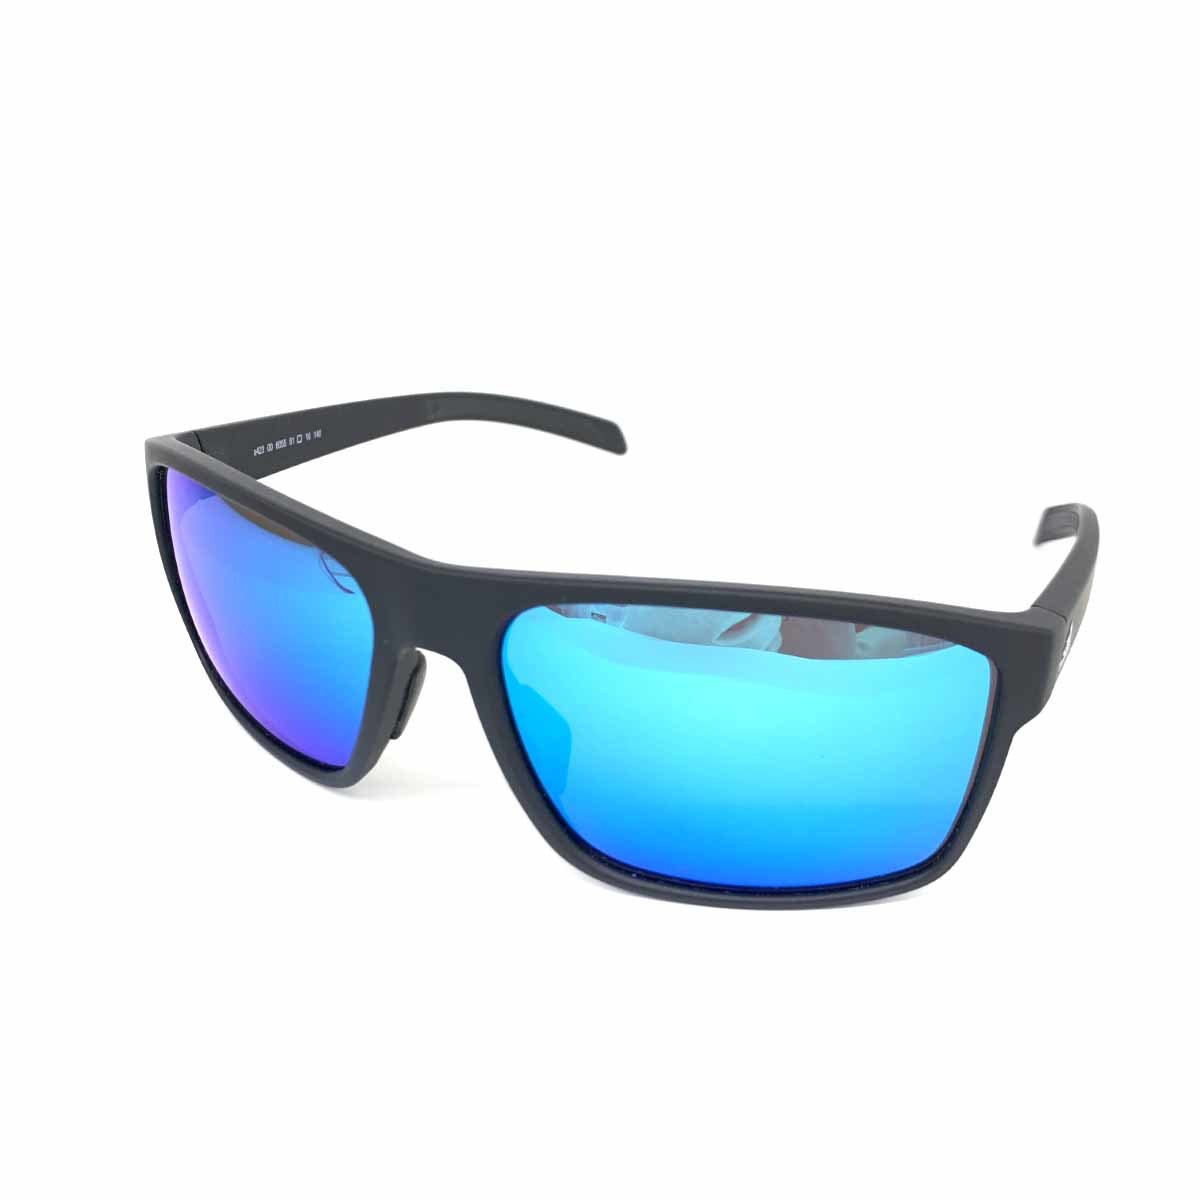 Good ◆ Adidas Adidas Whipstart Sunglasses ◆ A423 00 6055 Black Mirror Lens Men SUNGLASSES Clothing accessories